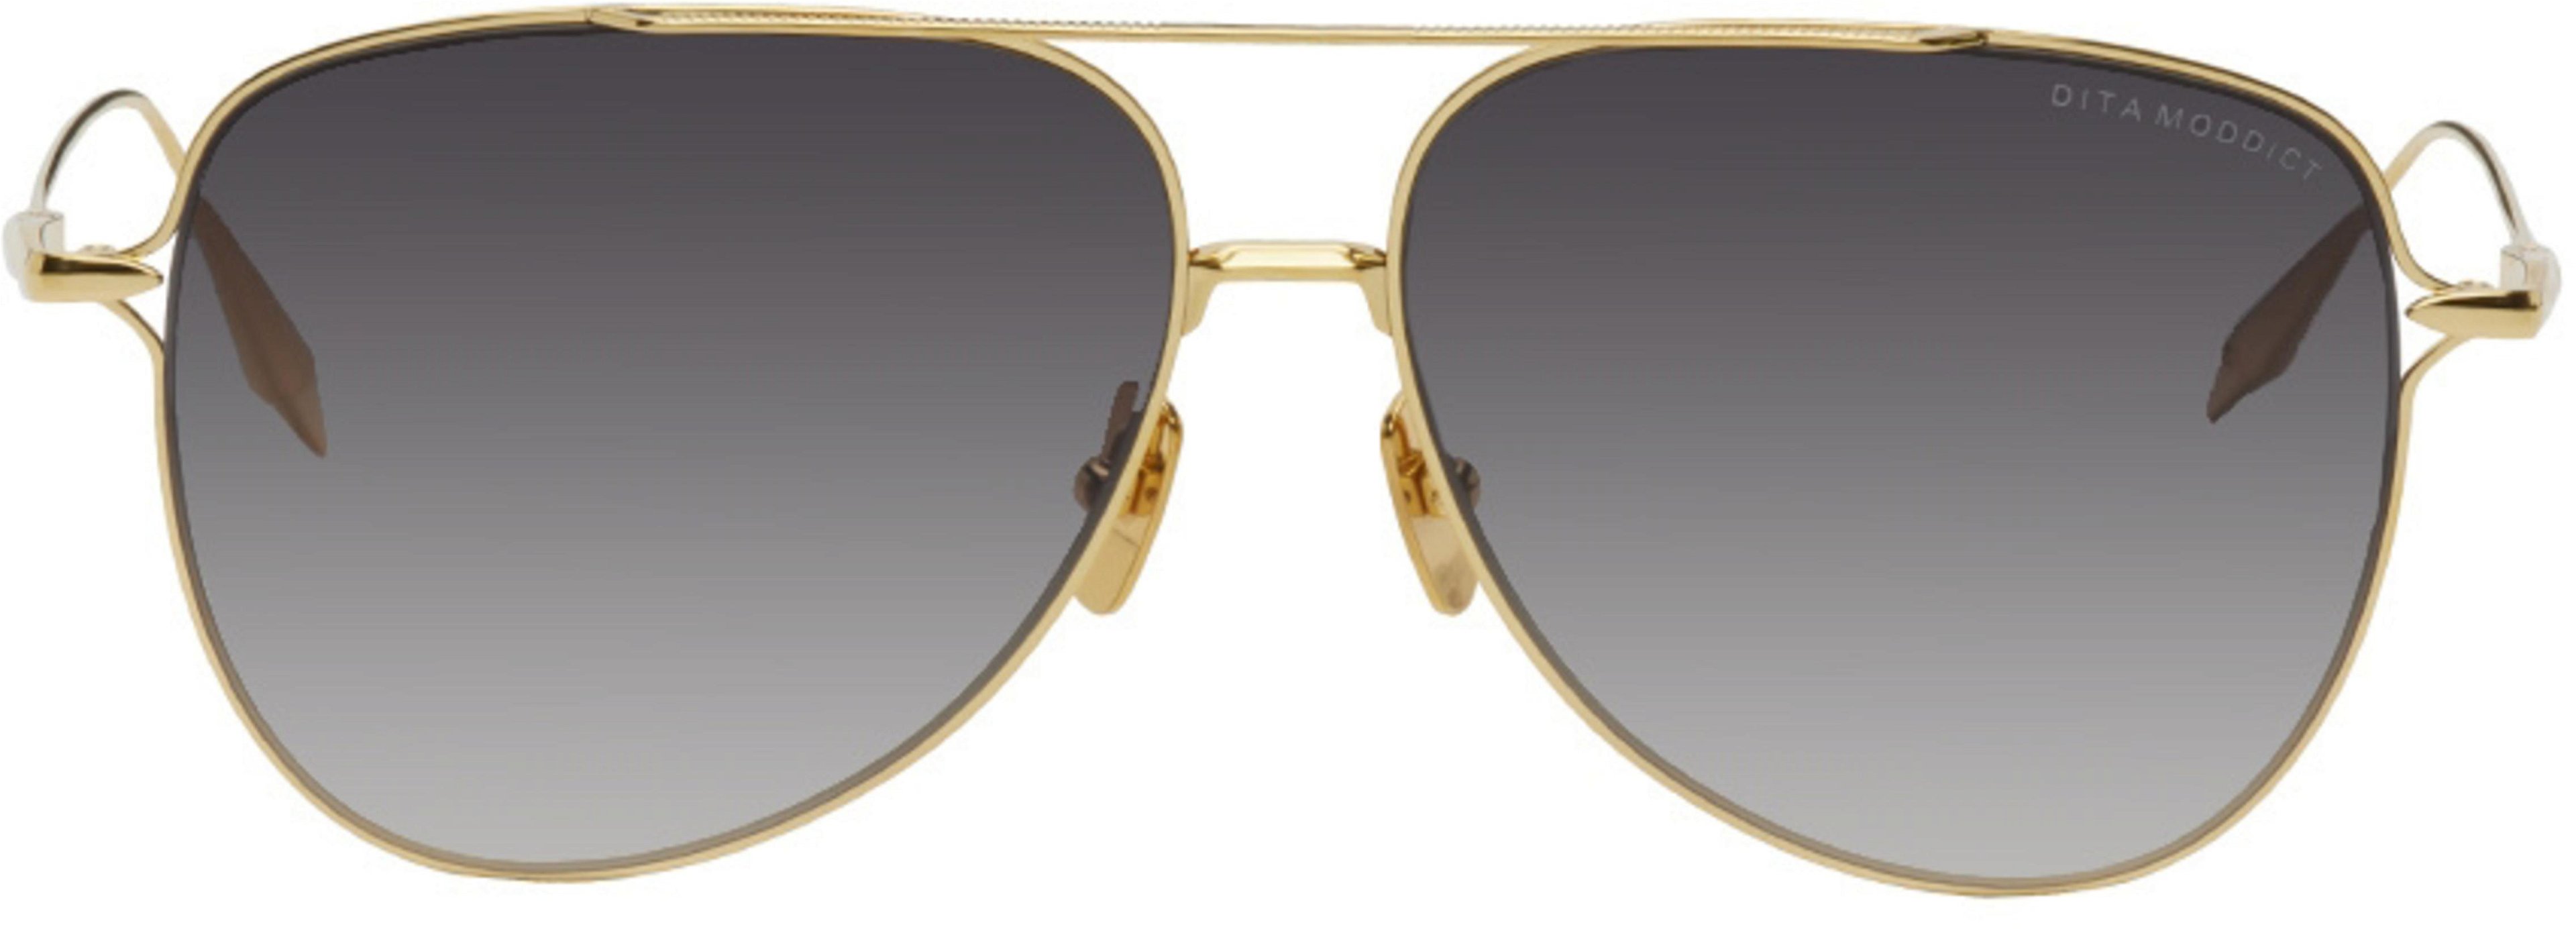 Gold Moddict Sunglasses by DITA